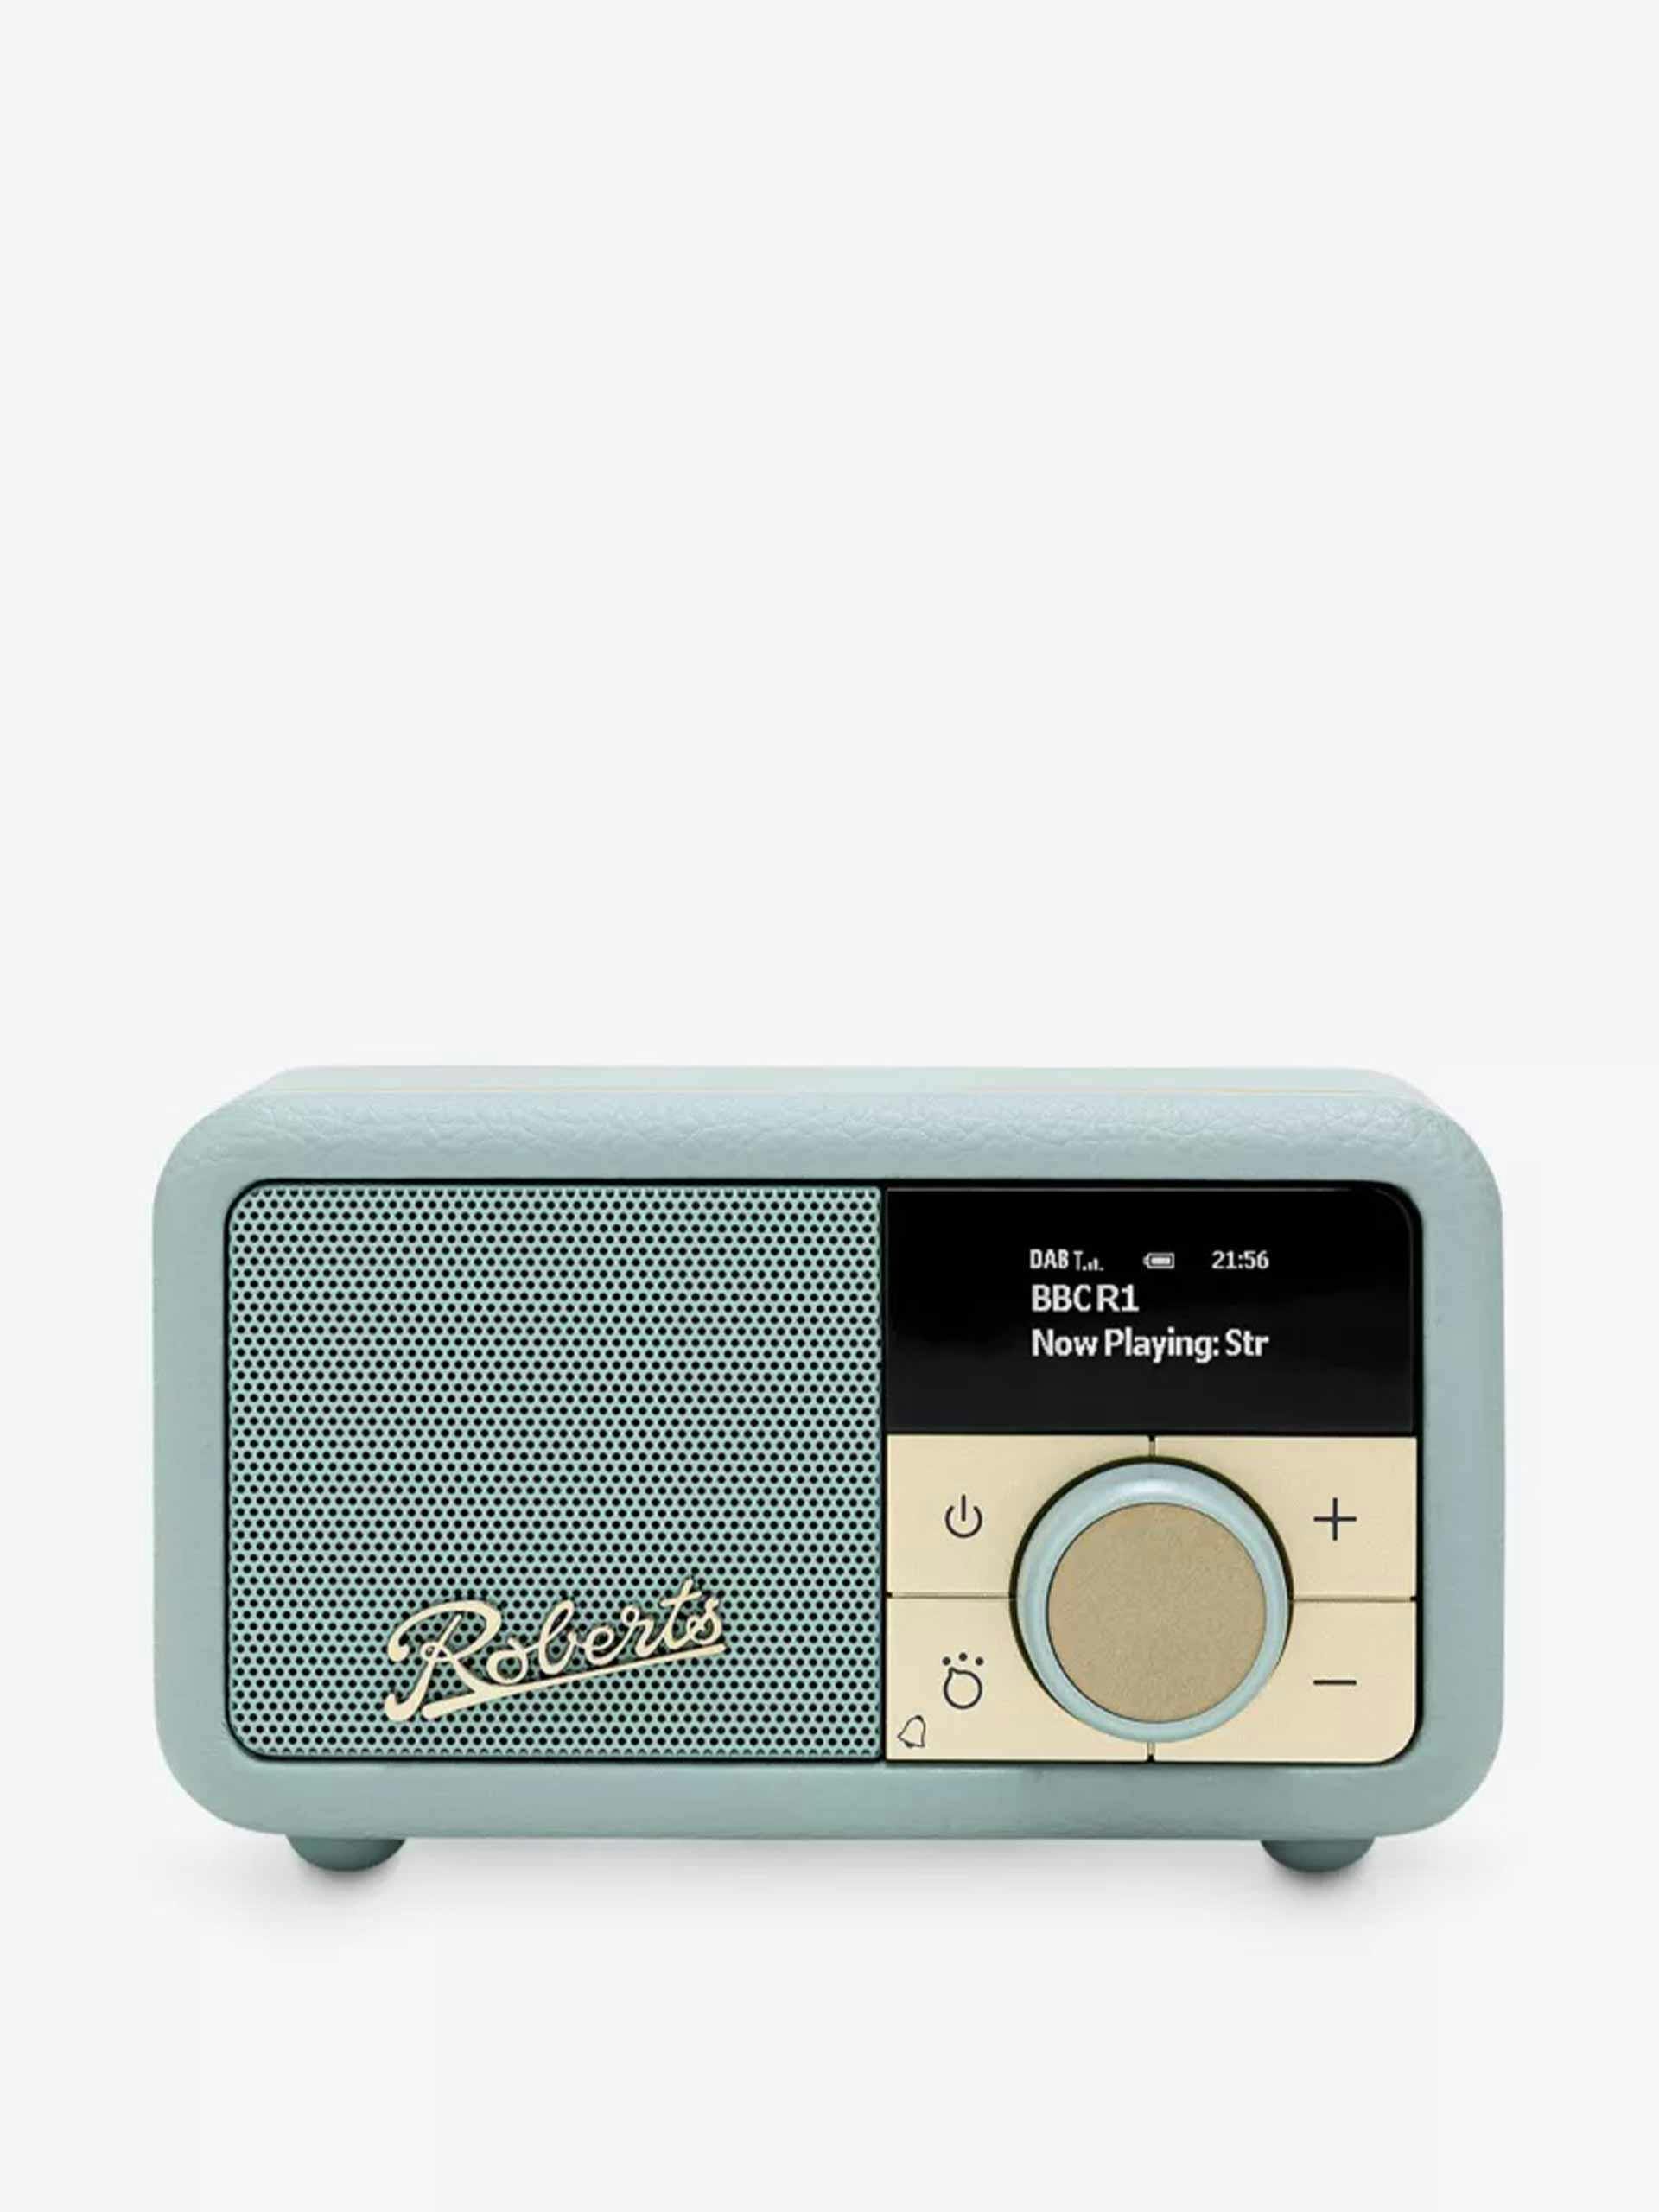 Revival Petite 2 DAB BT radio